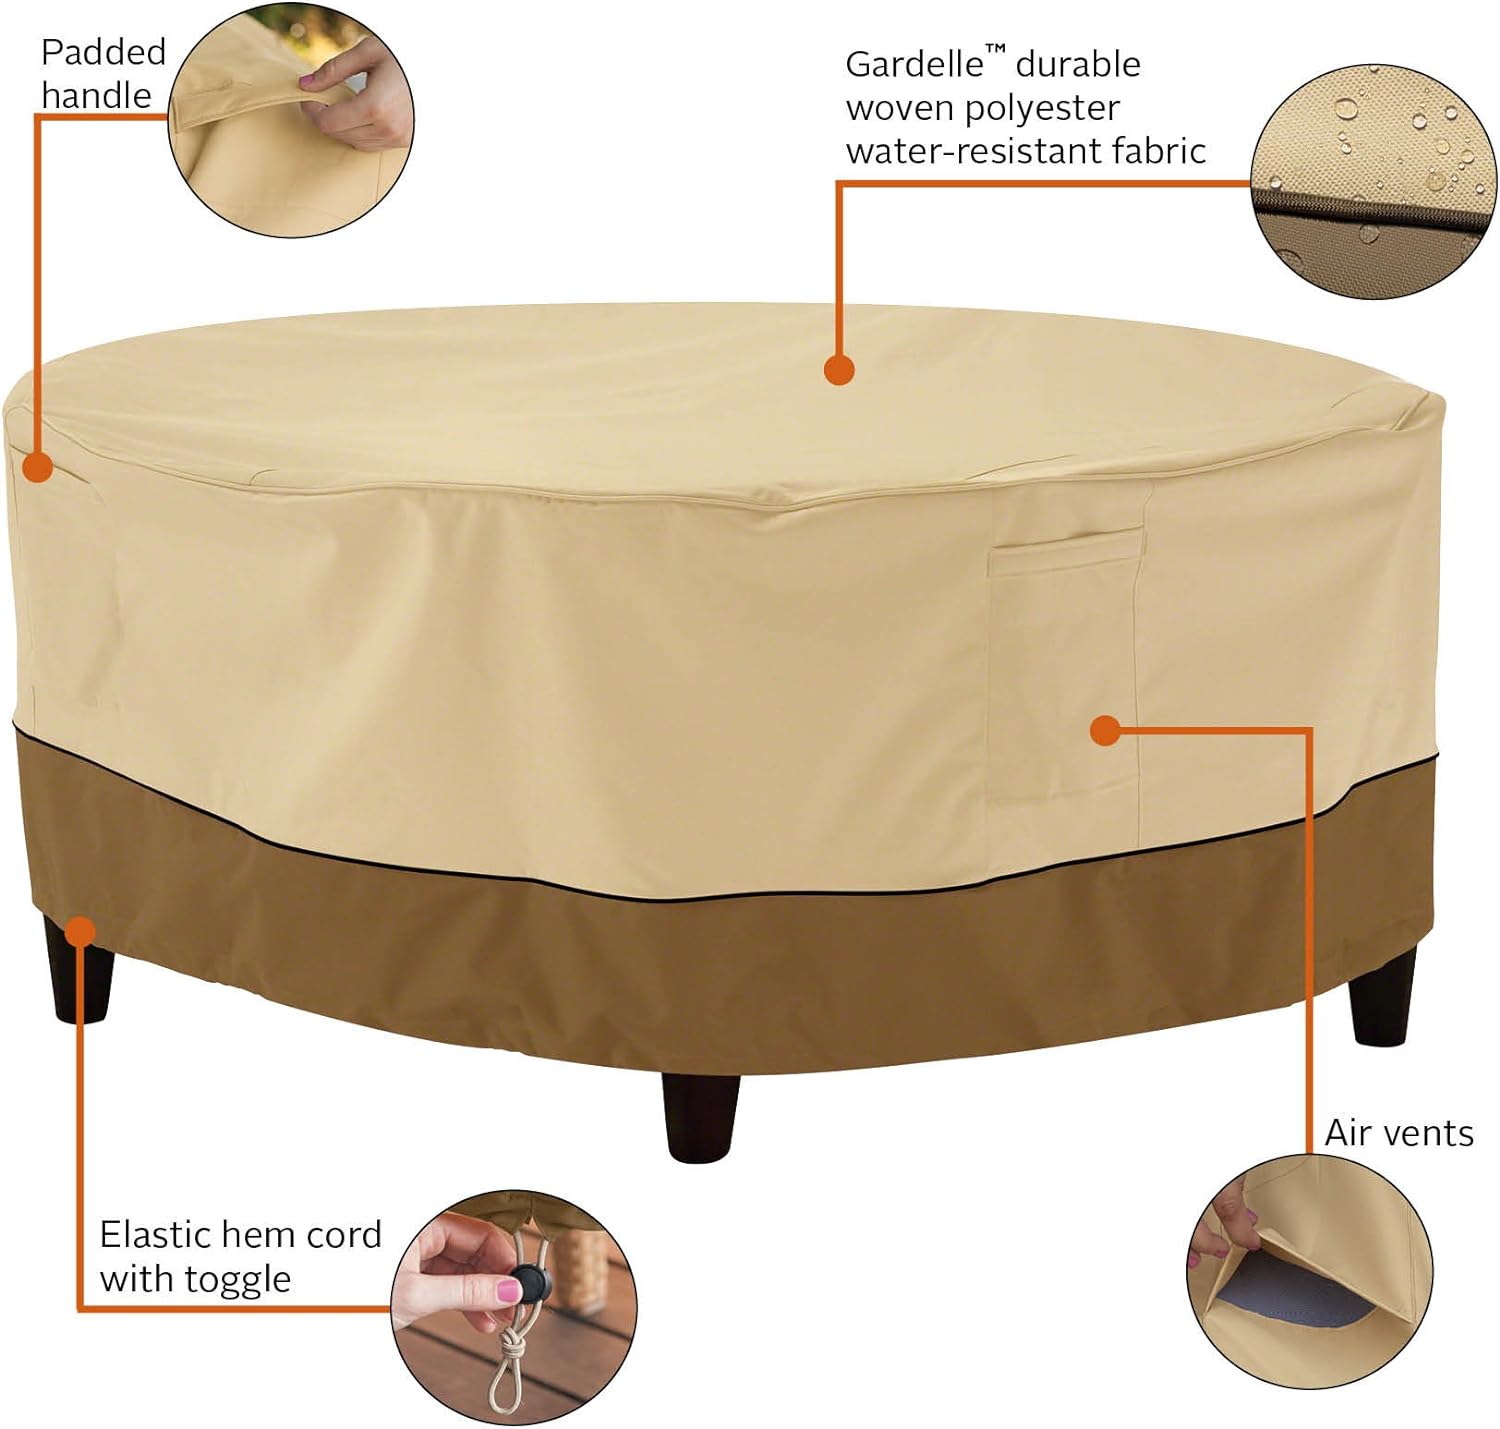 Classic Accessories Veranda Water-Resistant 30 Inch Round Patio Ottoman/Coffee Table Cover